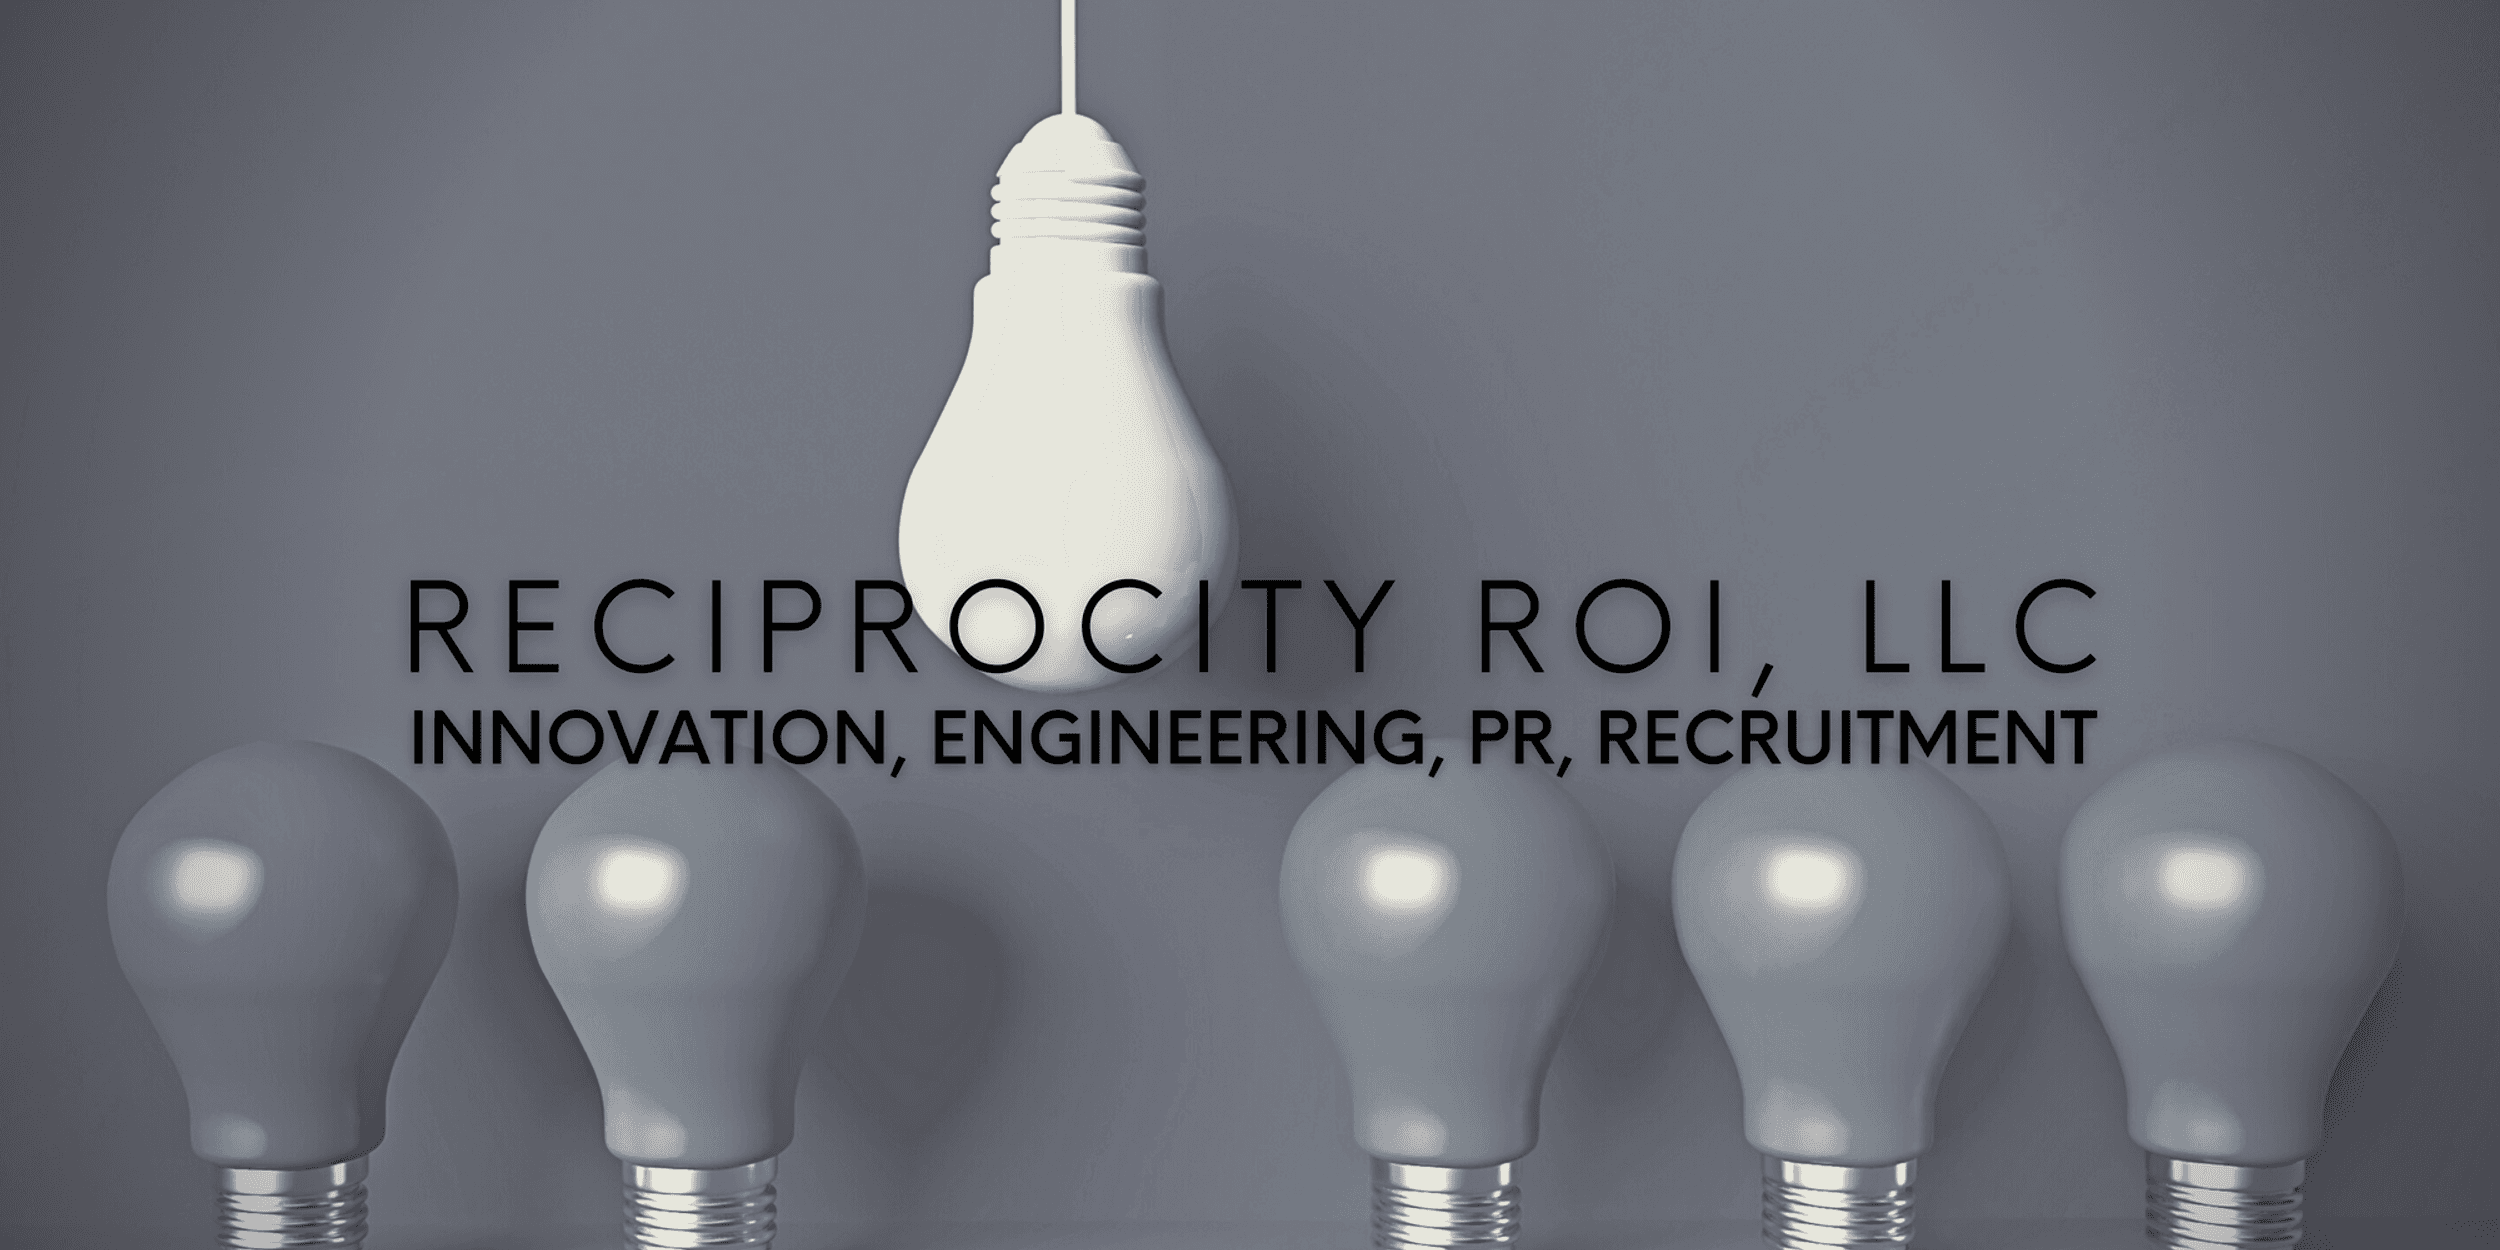 Product ROI INNOVATION | Reciprocity ROI, LLC image